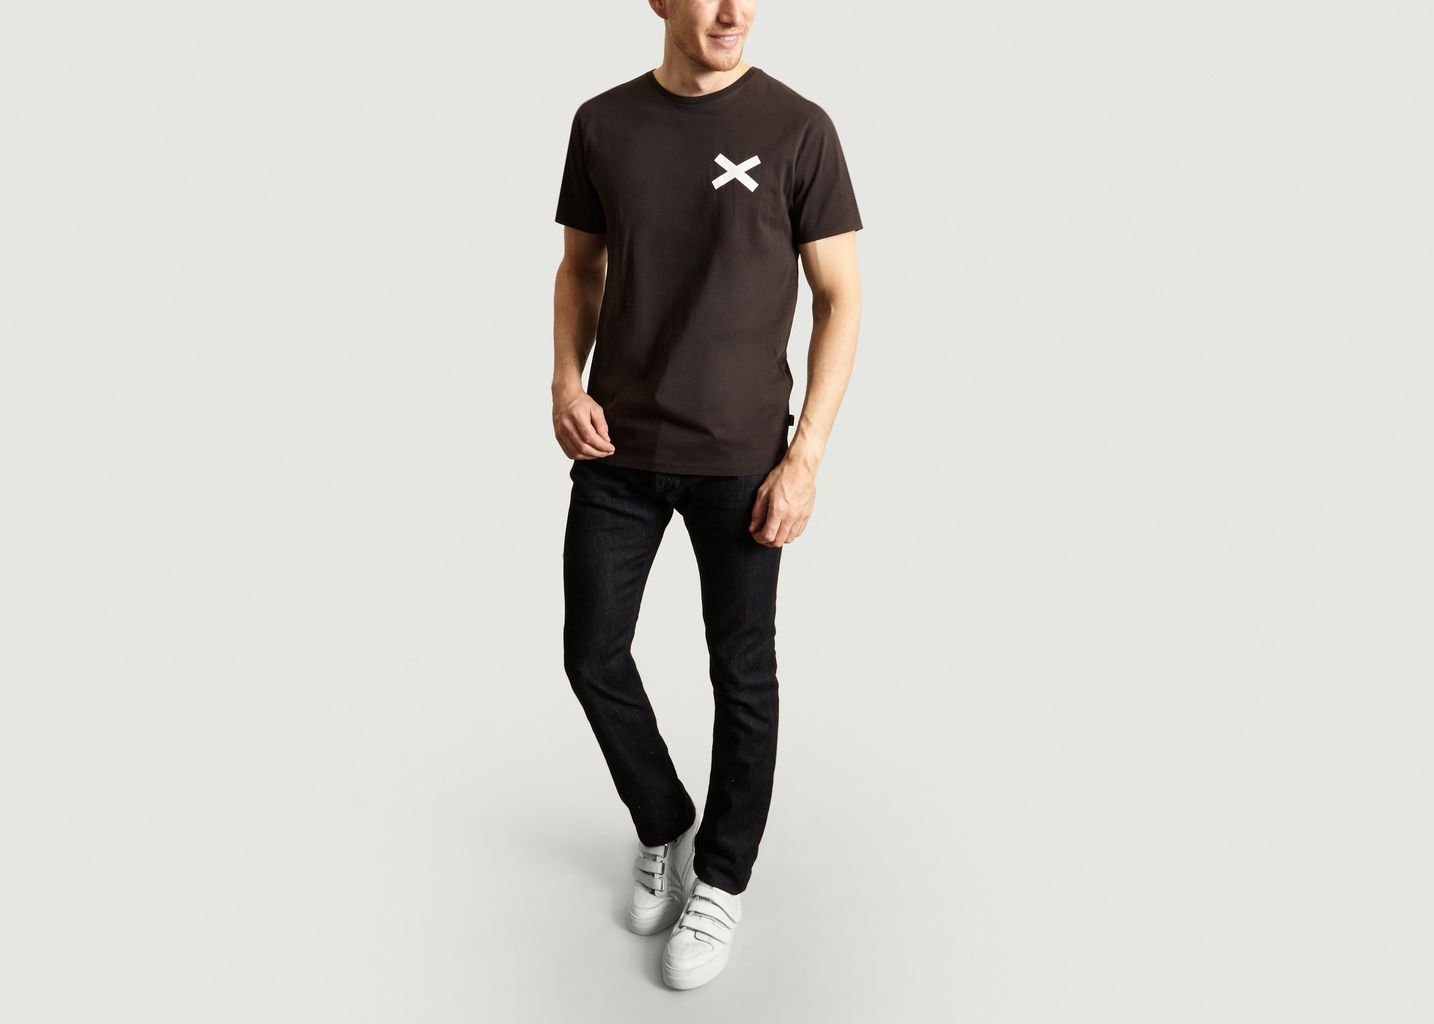 Cross T-shirt - Edmmond Studios